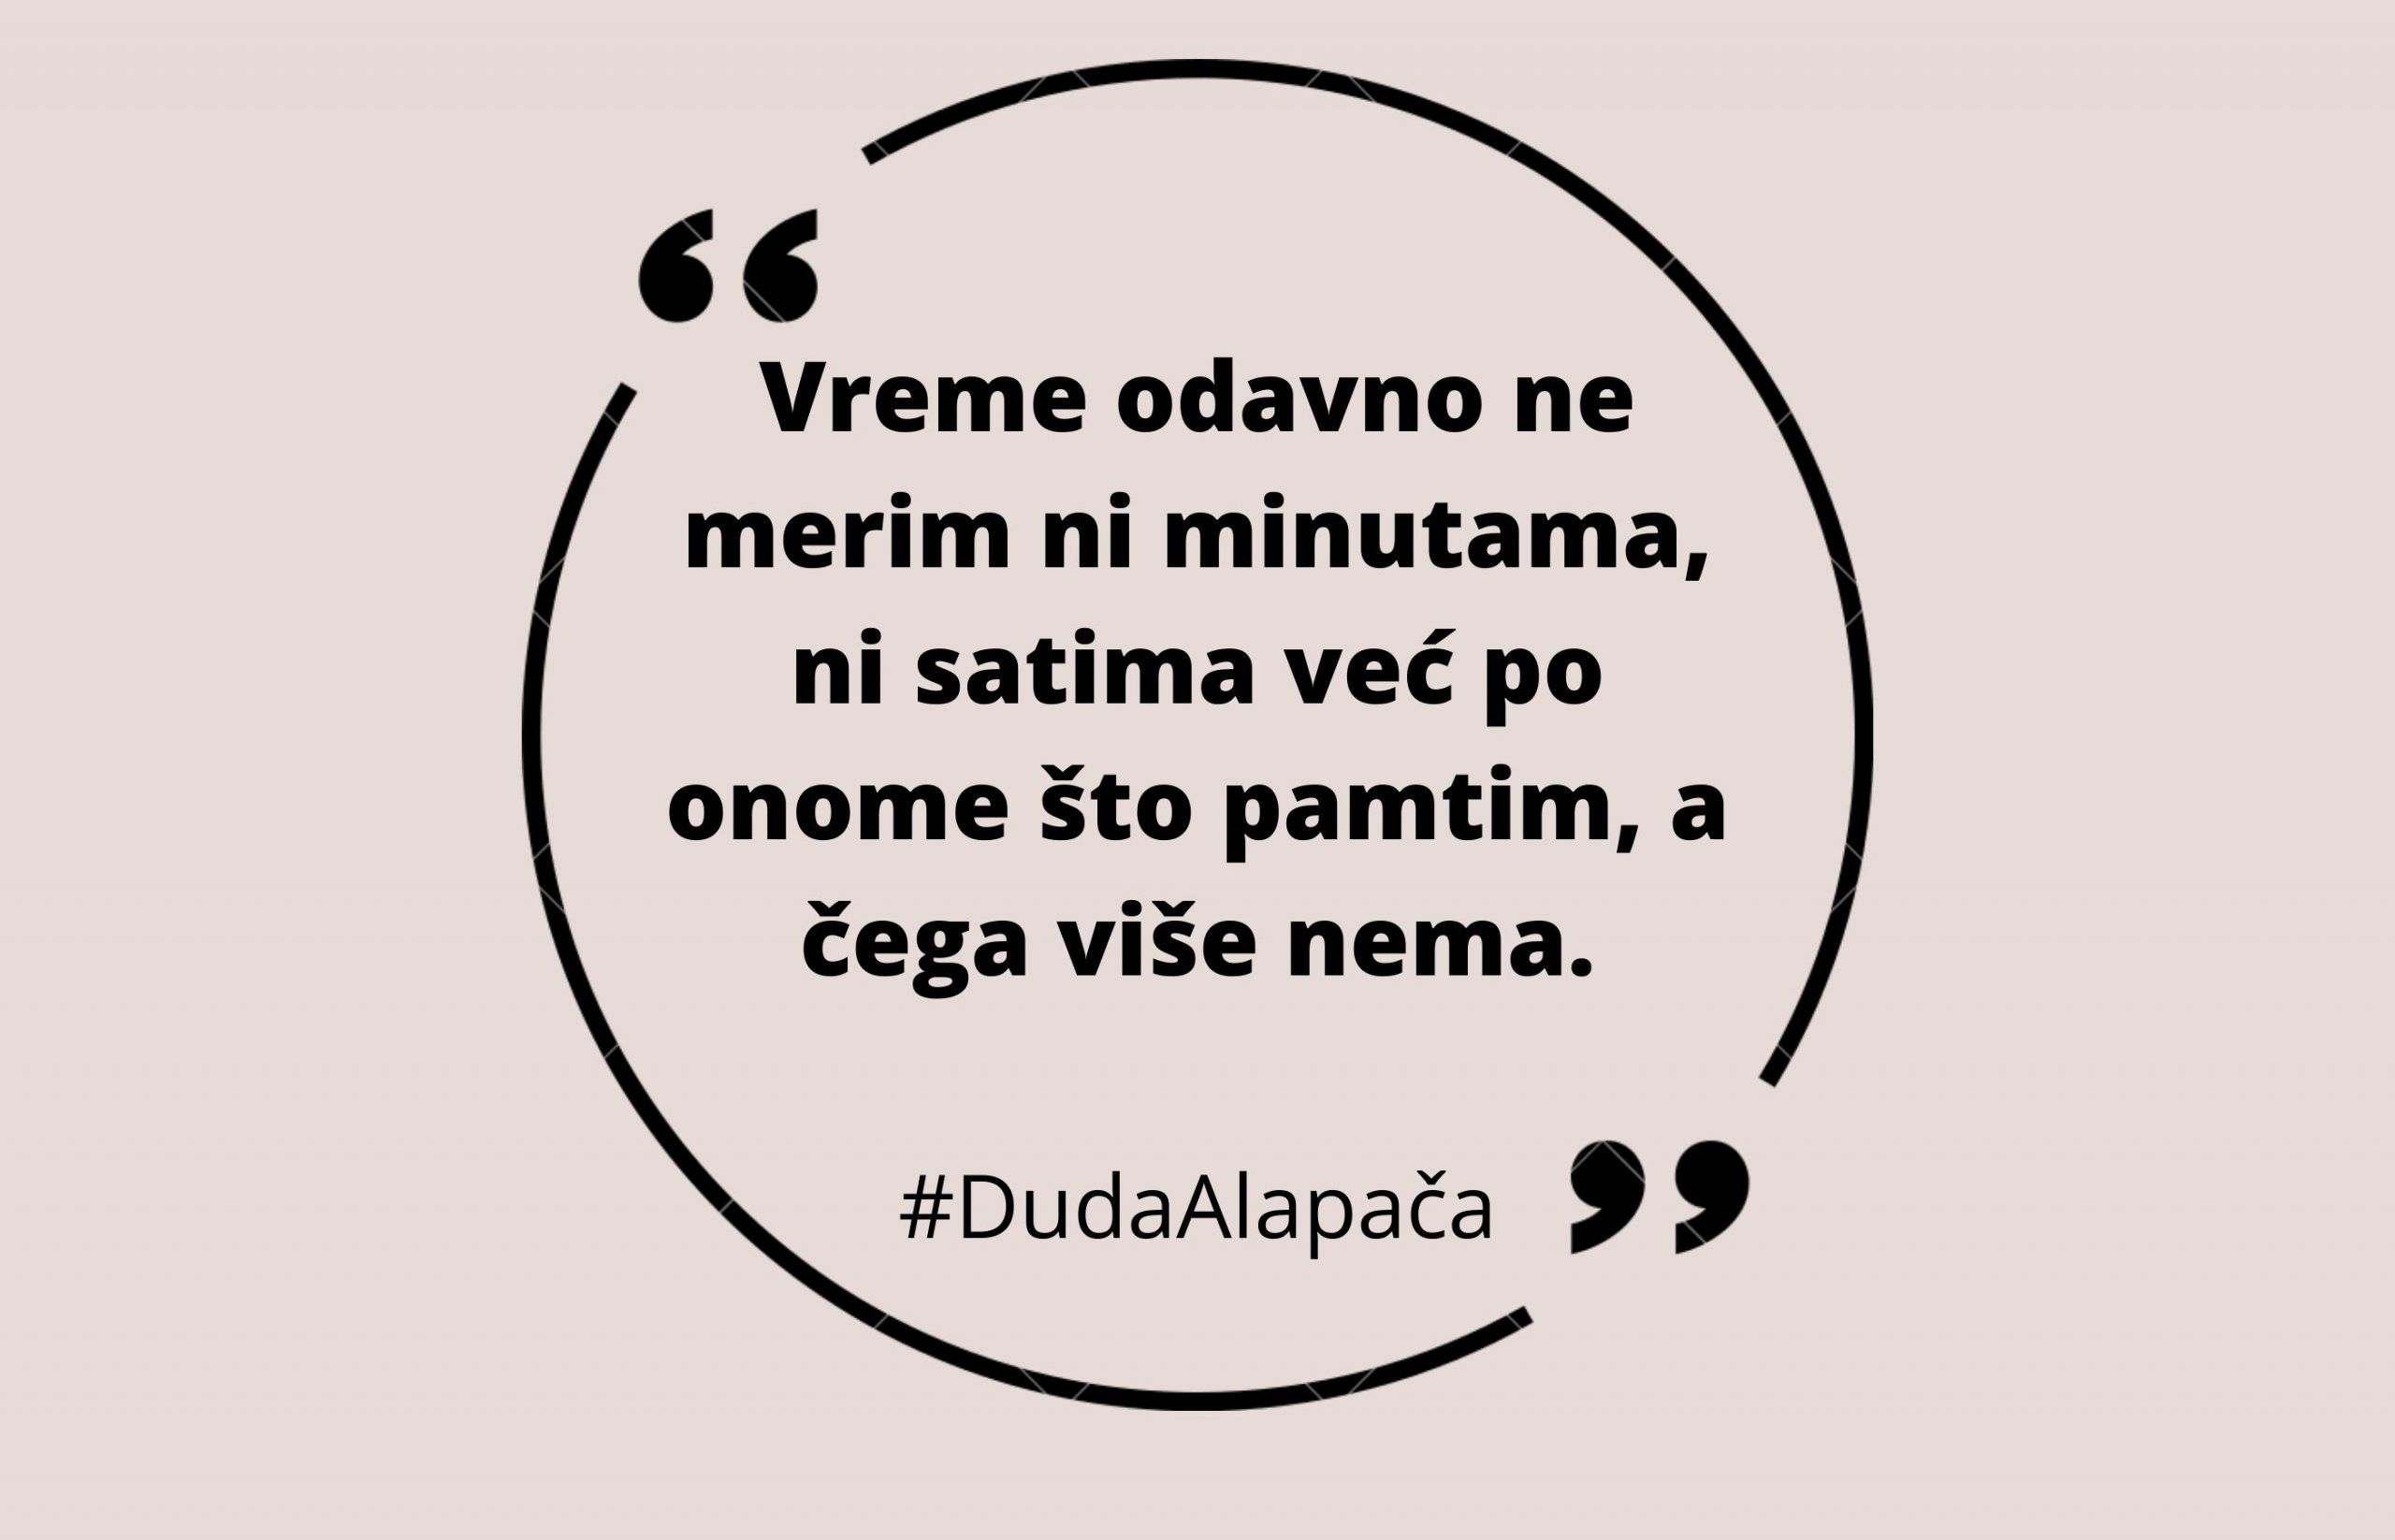 Duda Alapaca: Inky thumbnail